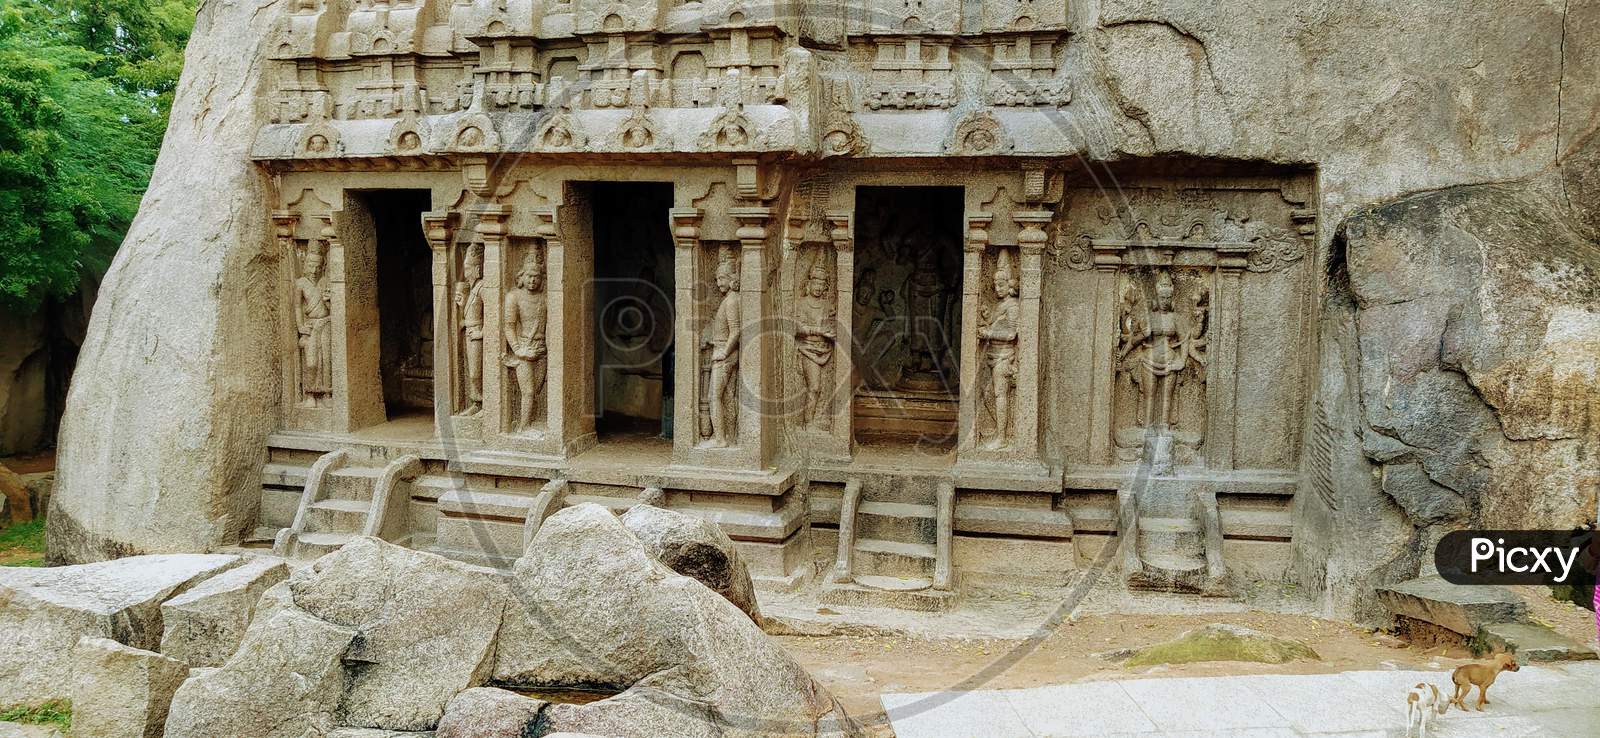 Trimurti Cave Temple